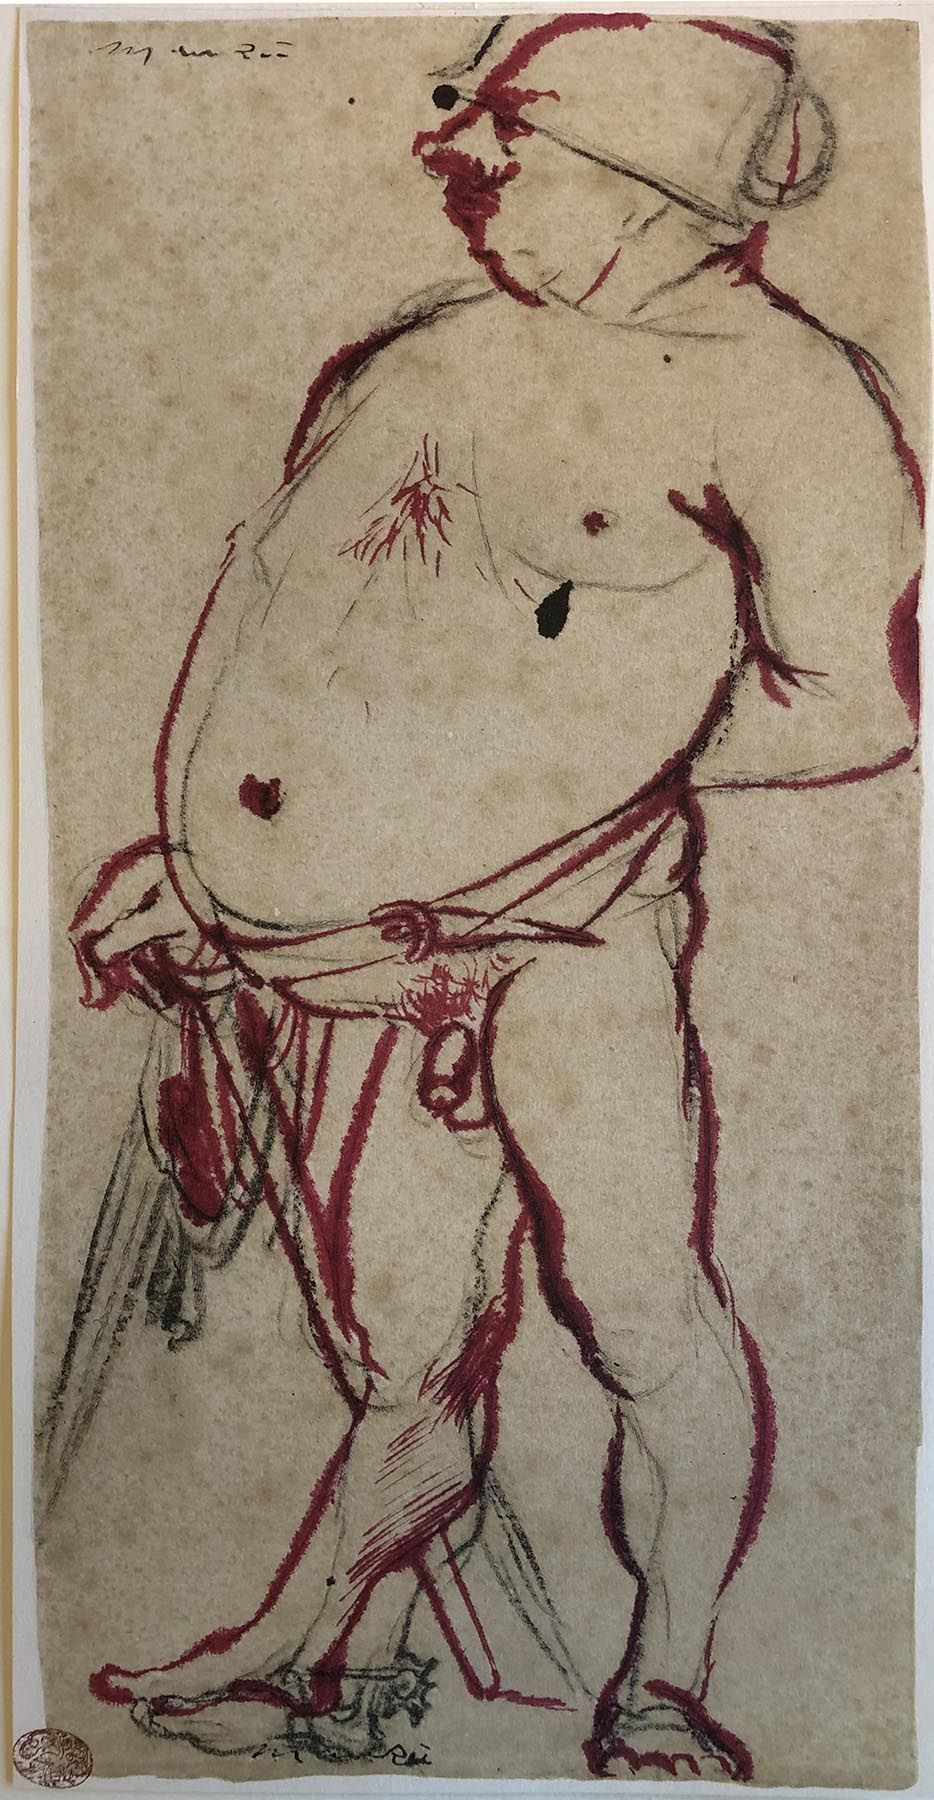 GIACOMO MANZÙ (Bergamo 1908 - Aprilia 1991) 男性裸体

多张纸上，左下方有Einaudi印章

34x18厘米